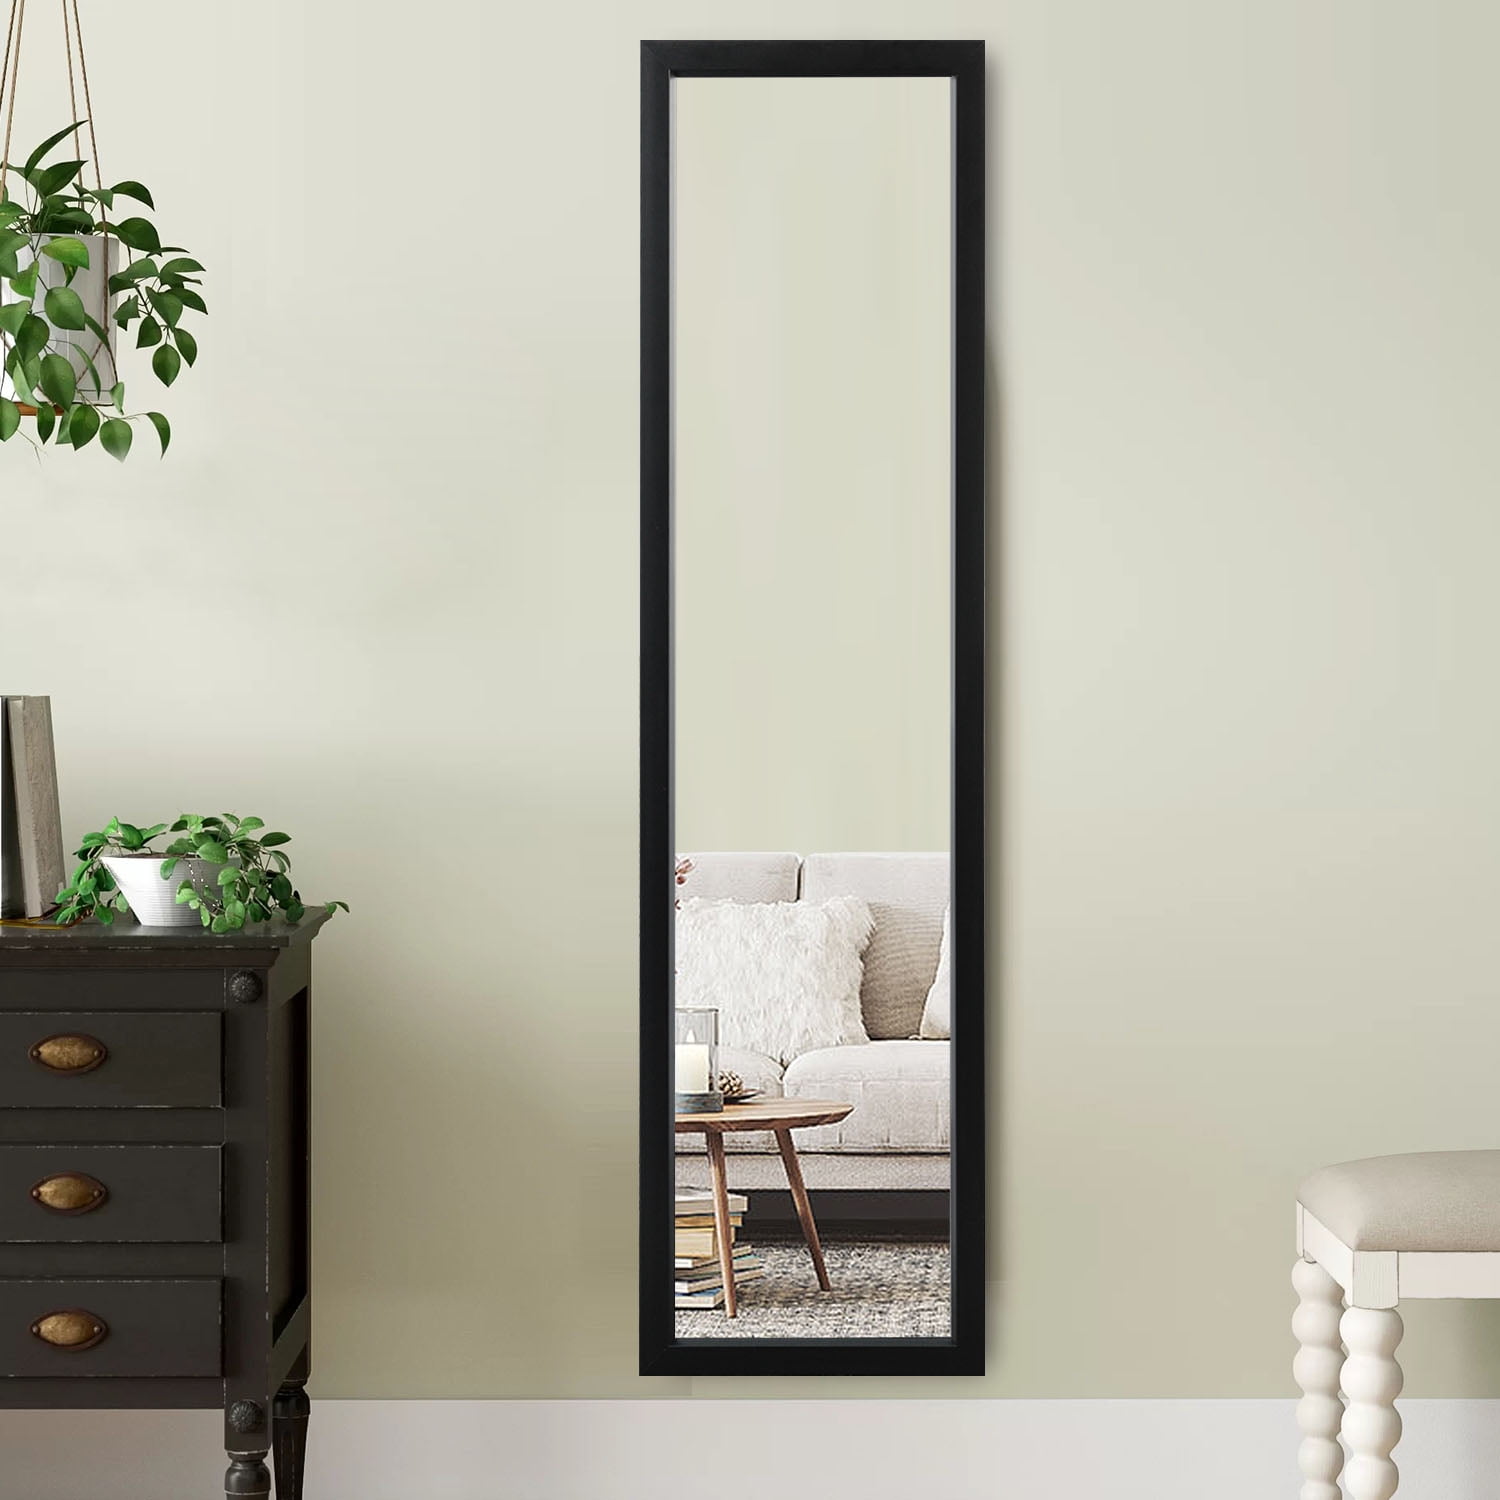 Neutype 55" x 12" Black Full Length Mirror Floor Mirror Wall Mounted